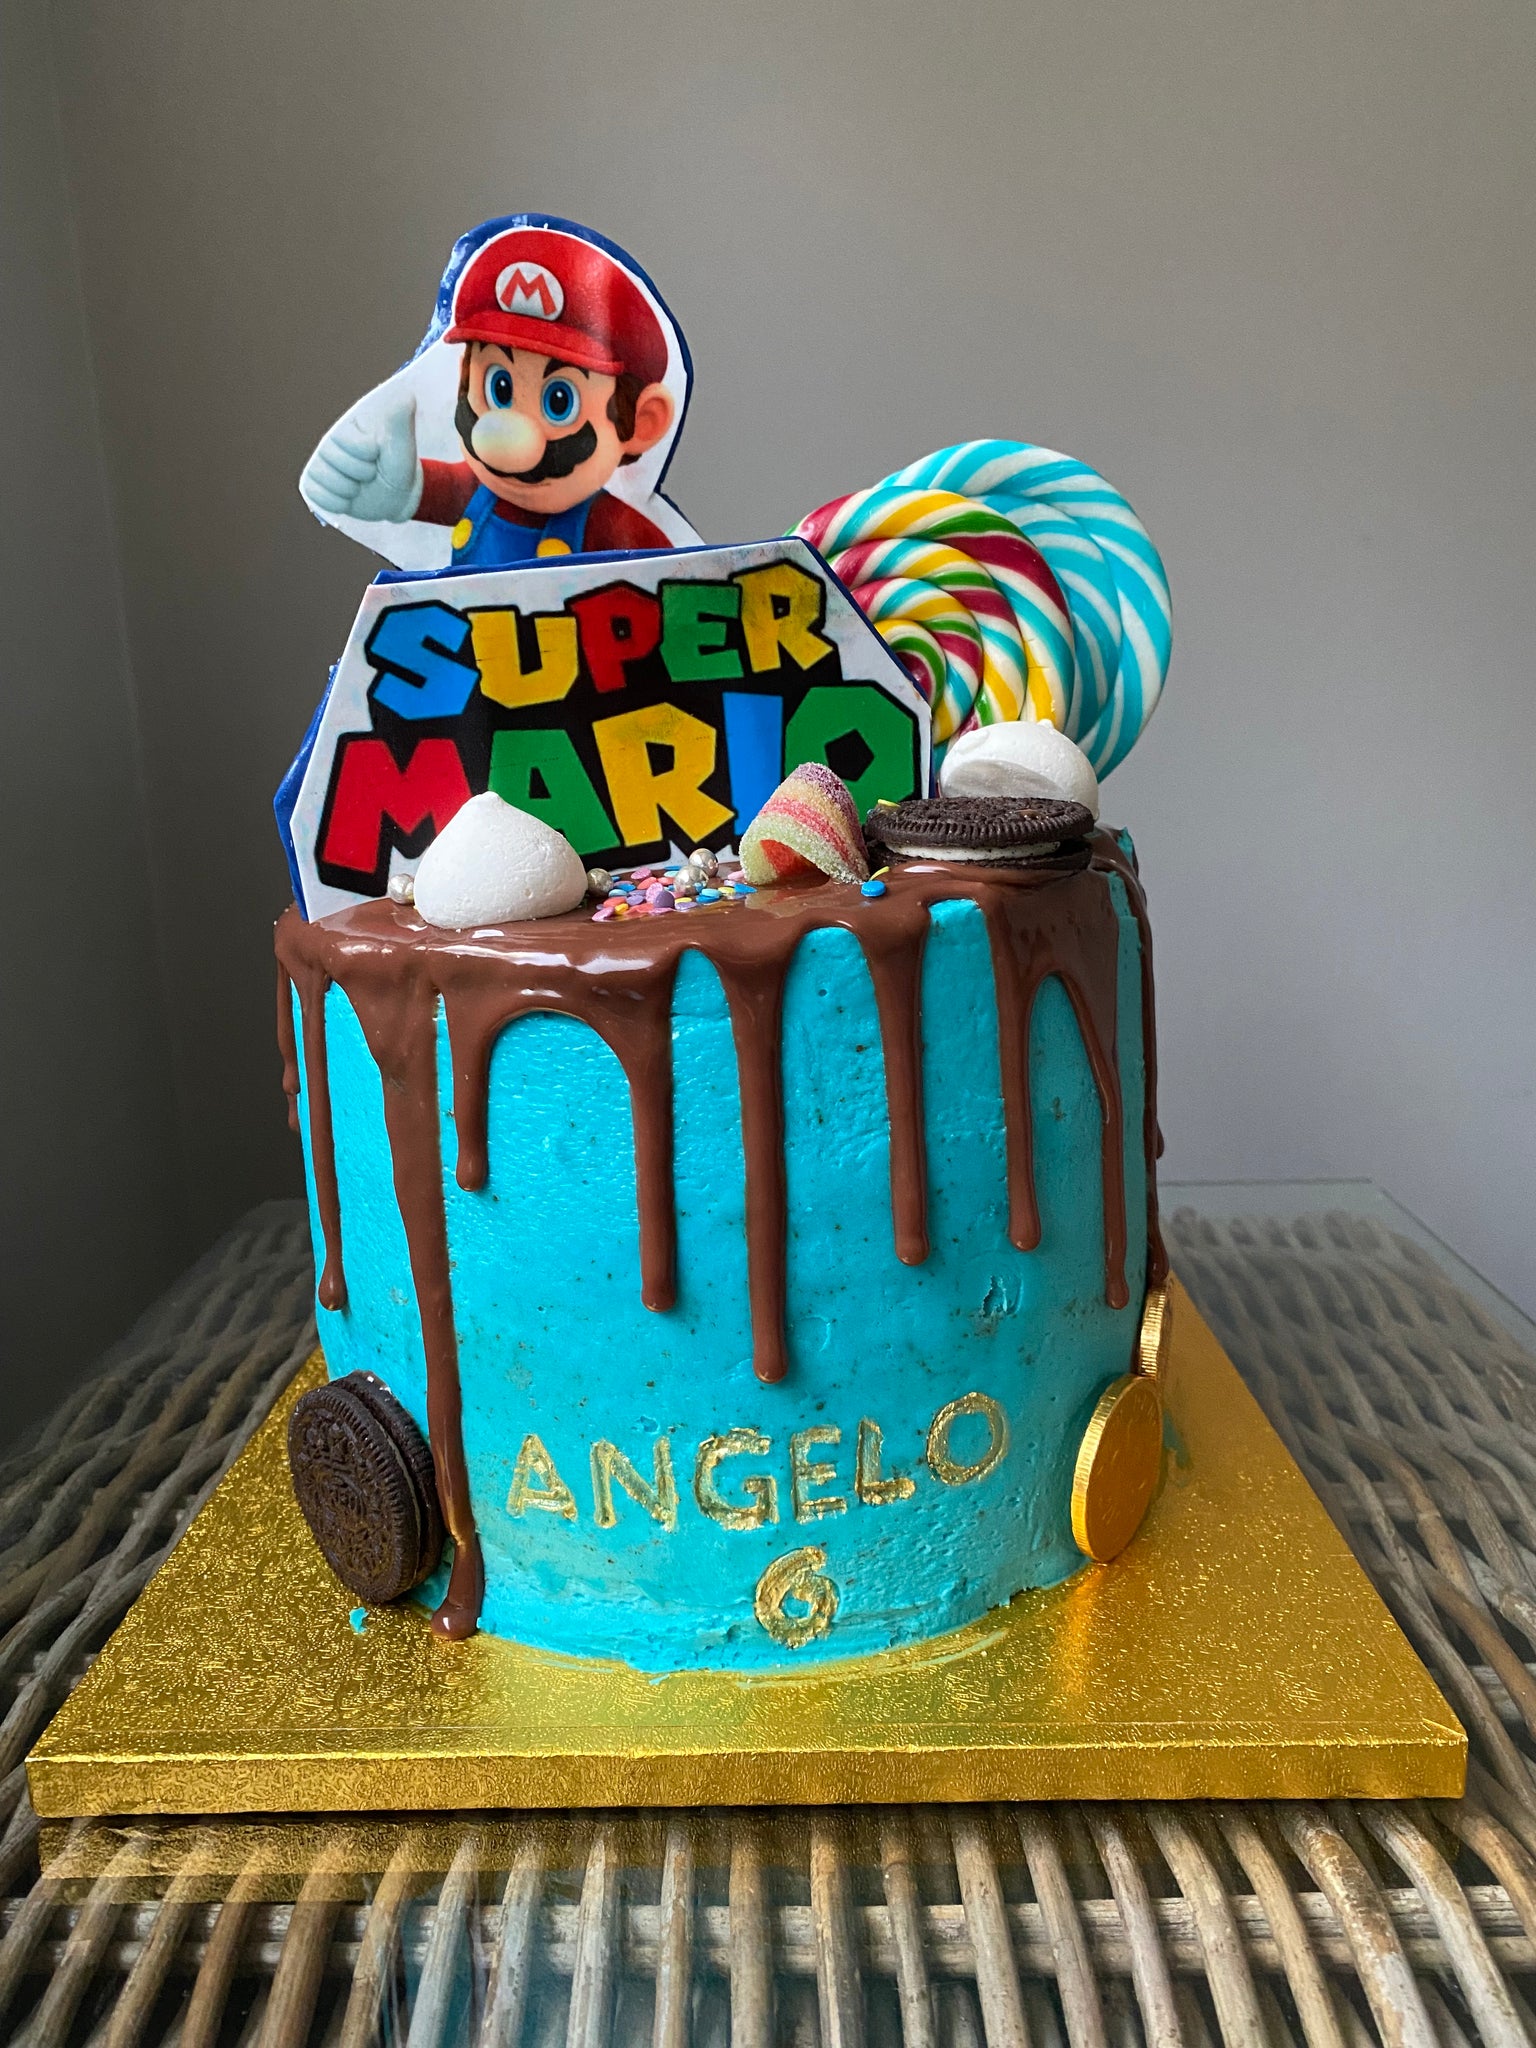 Super Mario Character cake